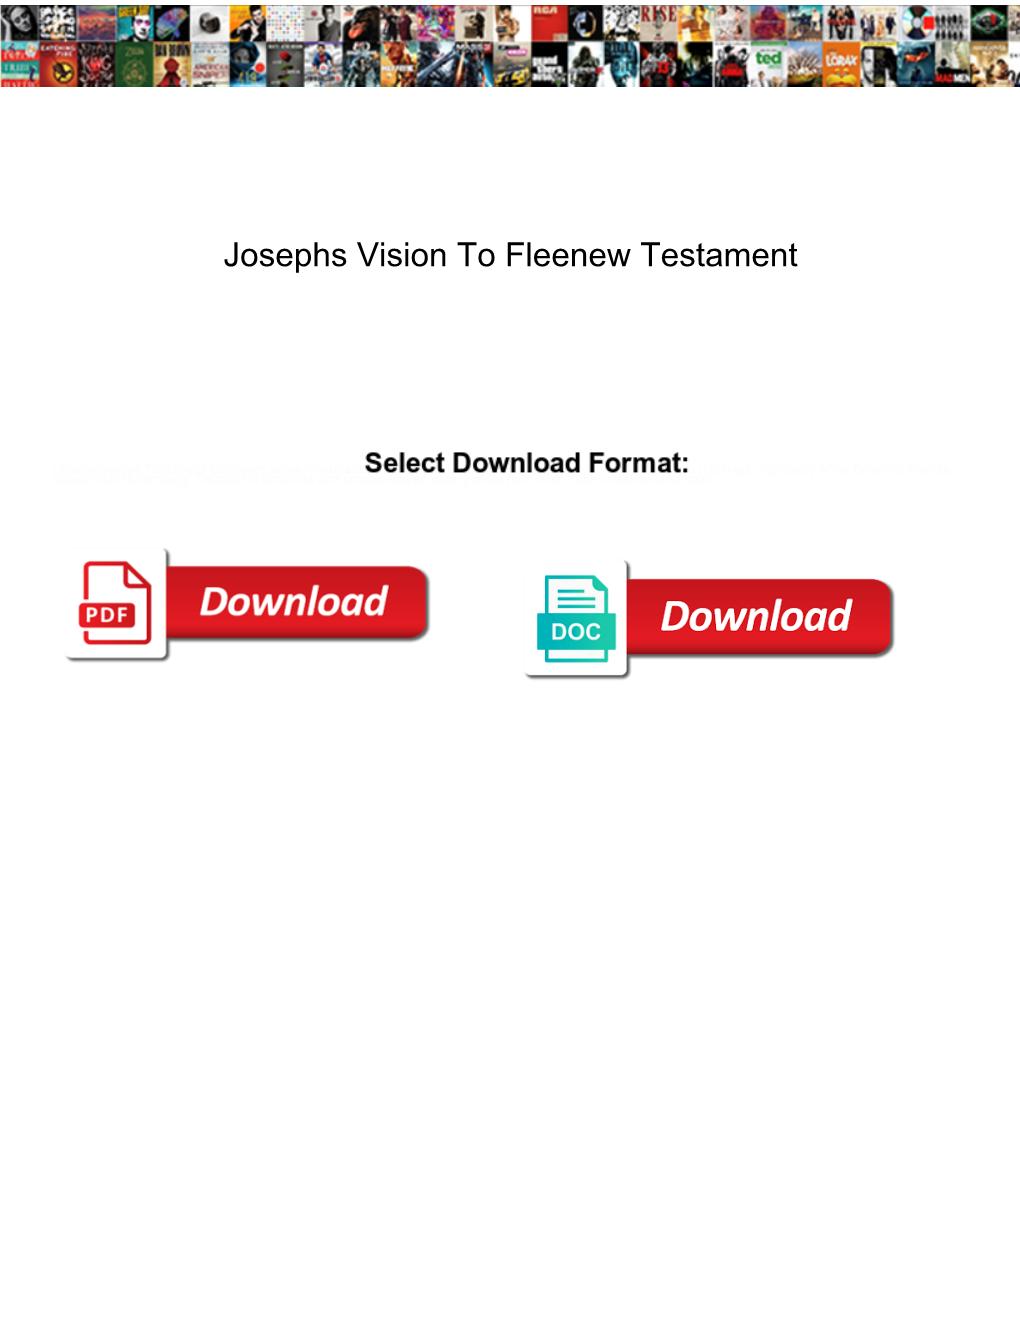 Josephs Vision to Fleenew Testament